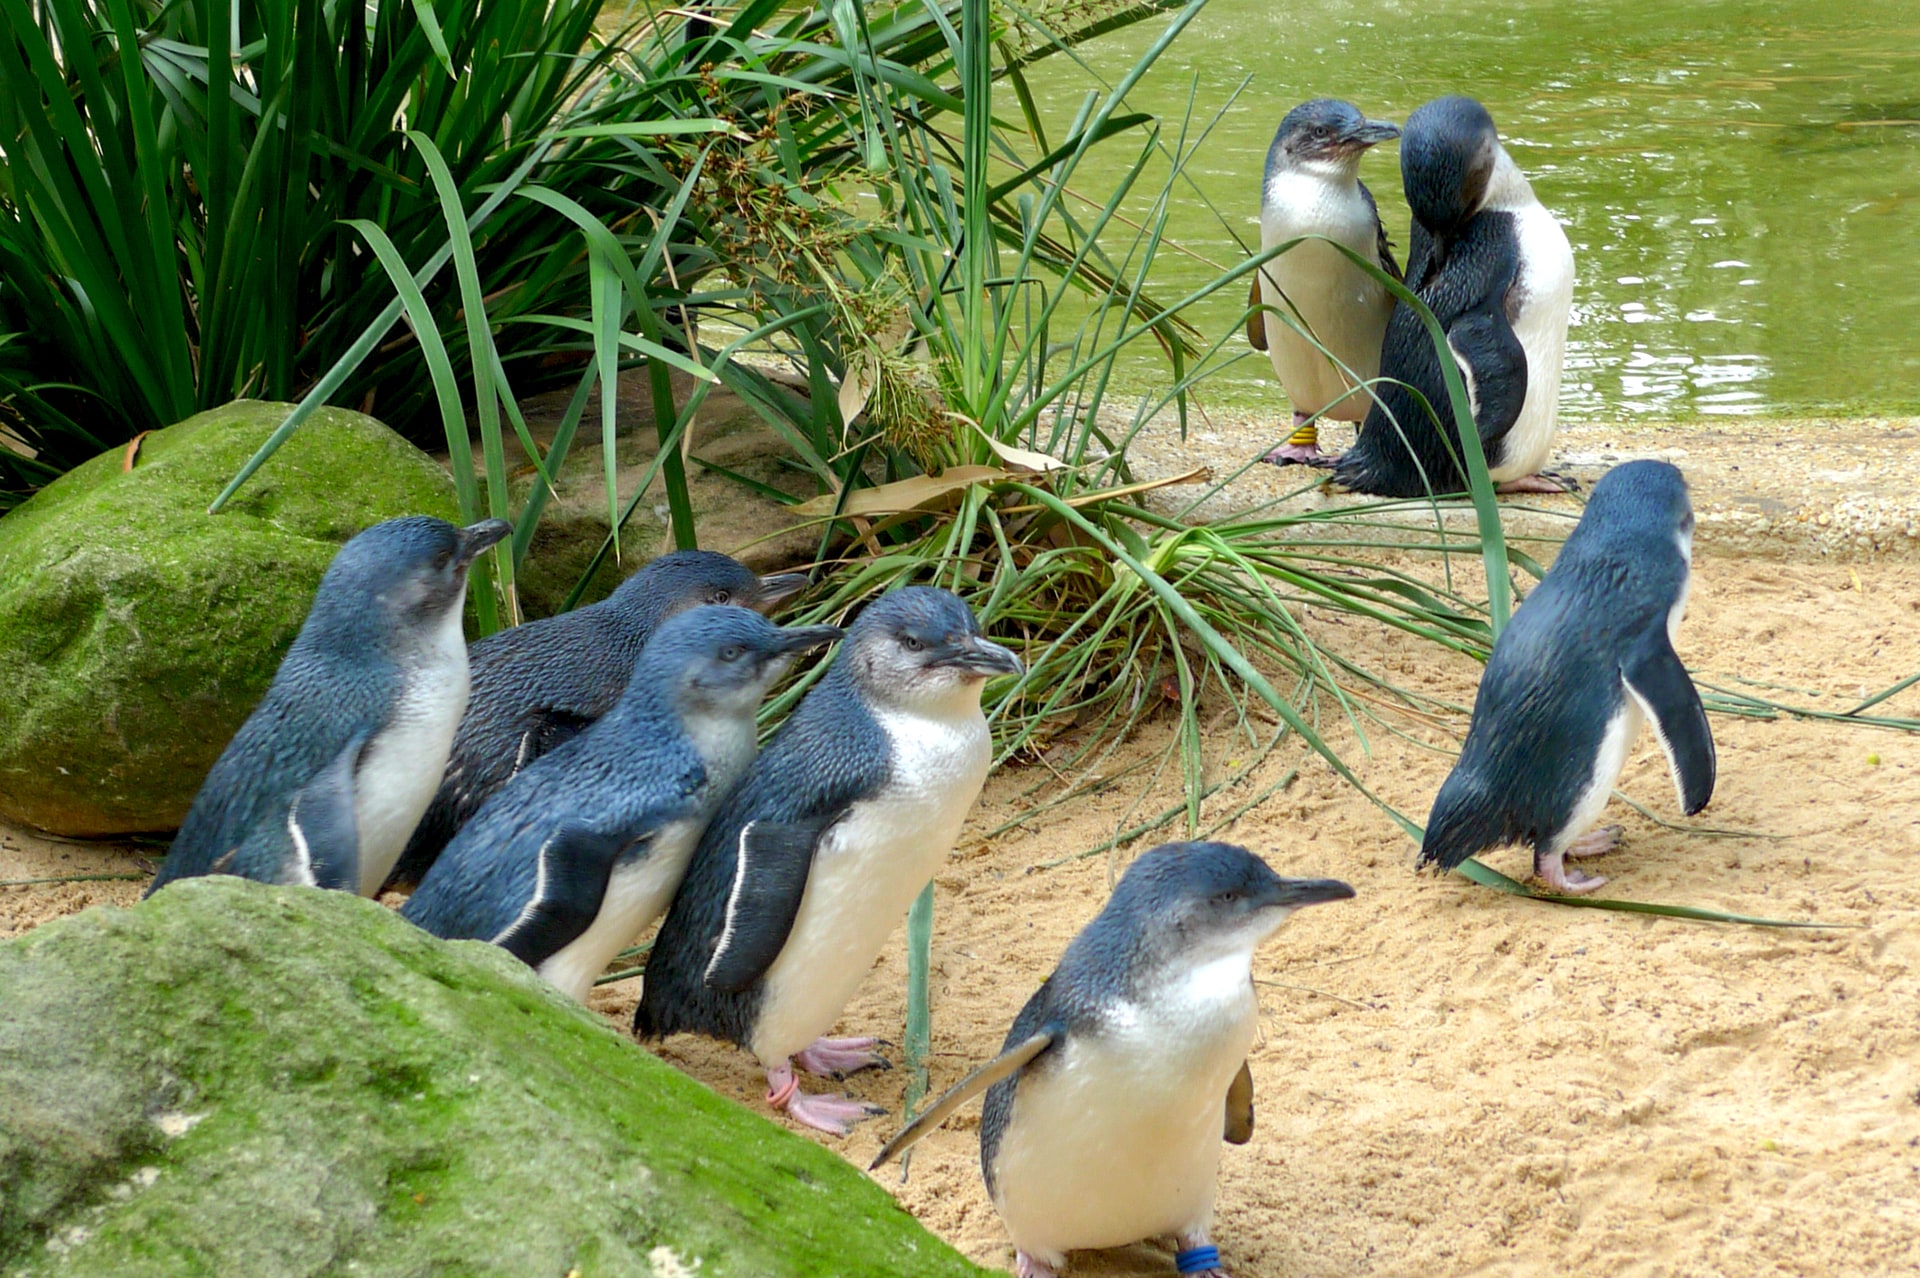 Group of penguins on sand near river